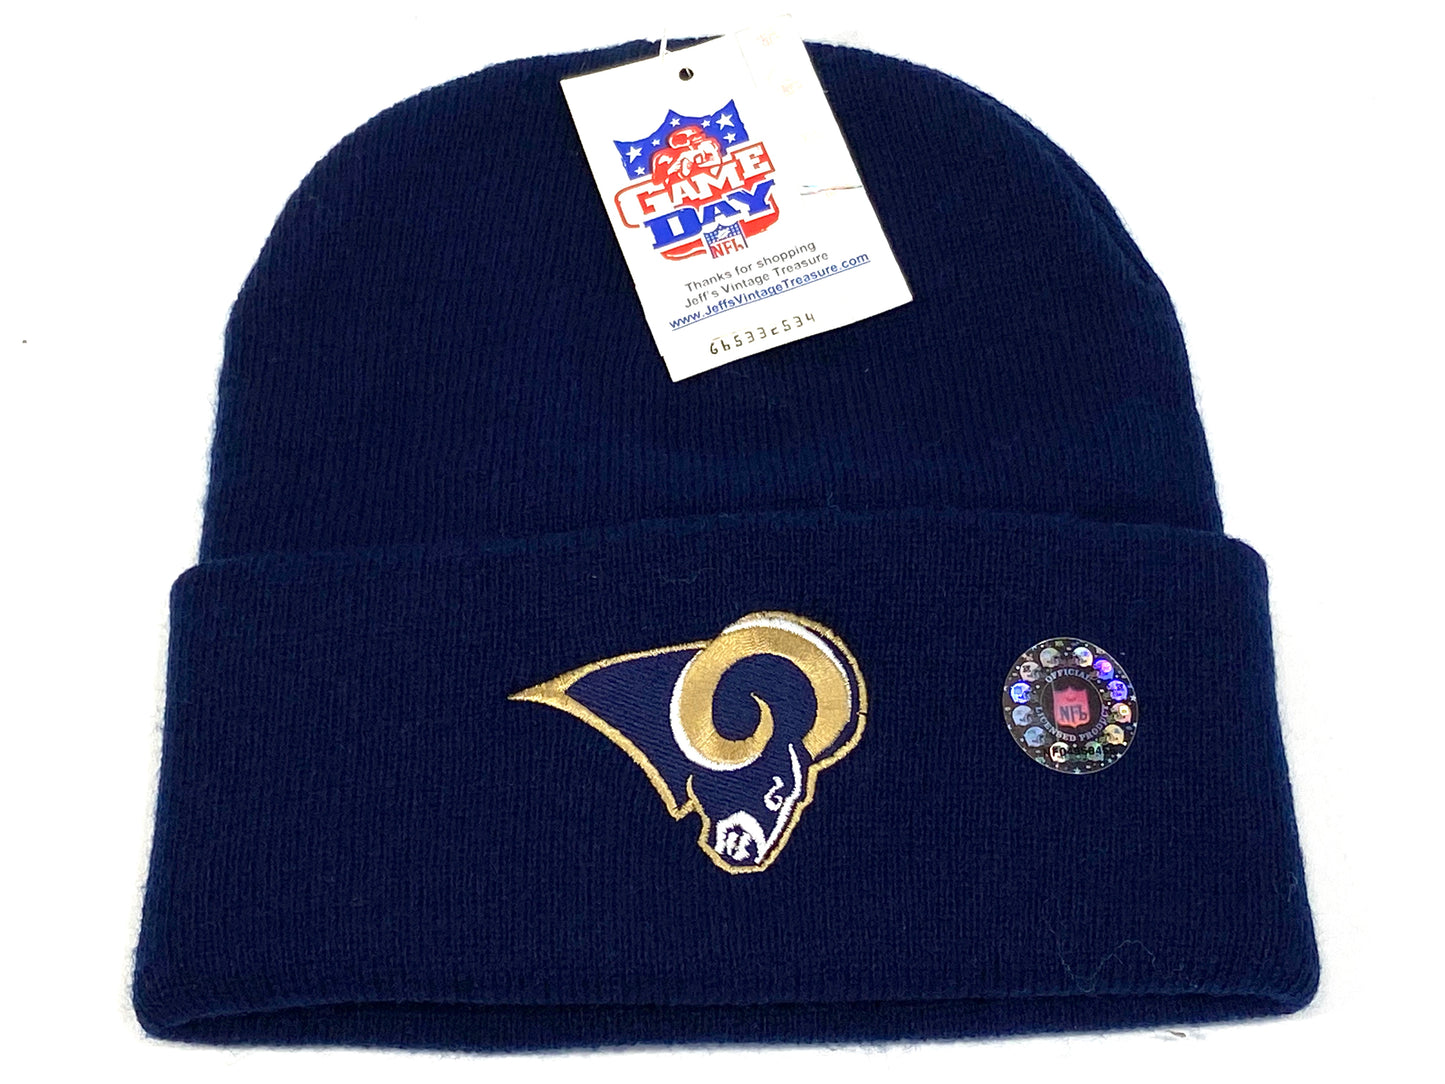 St. Louis Rams Vintage NFL Cuffed Knit Navy Logo Hat by Rossmor Industries